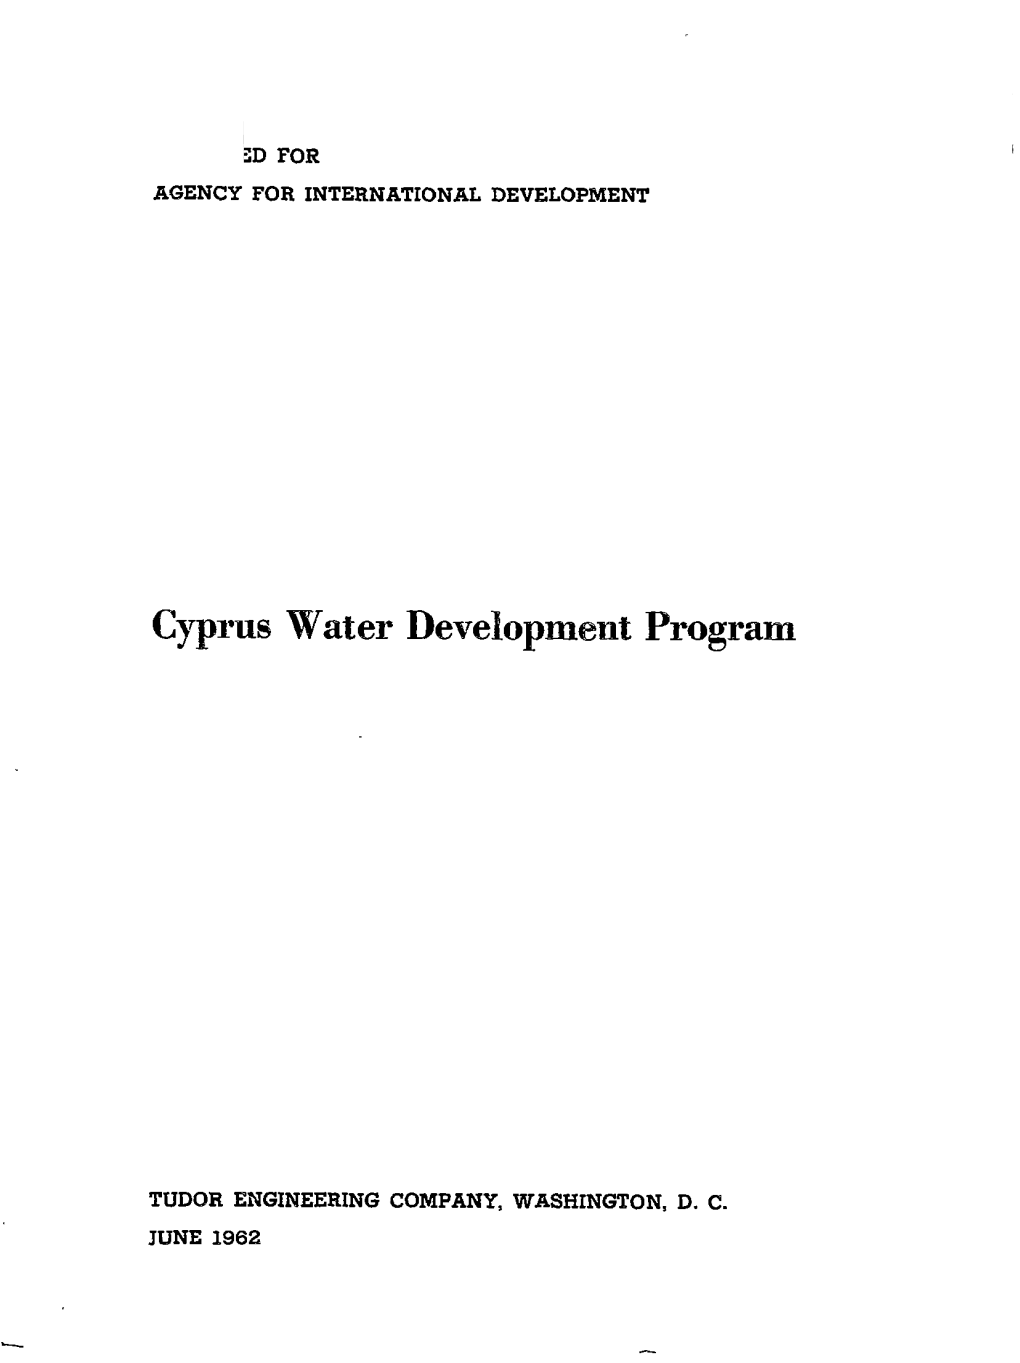 Cyprus Water Development Program